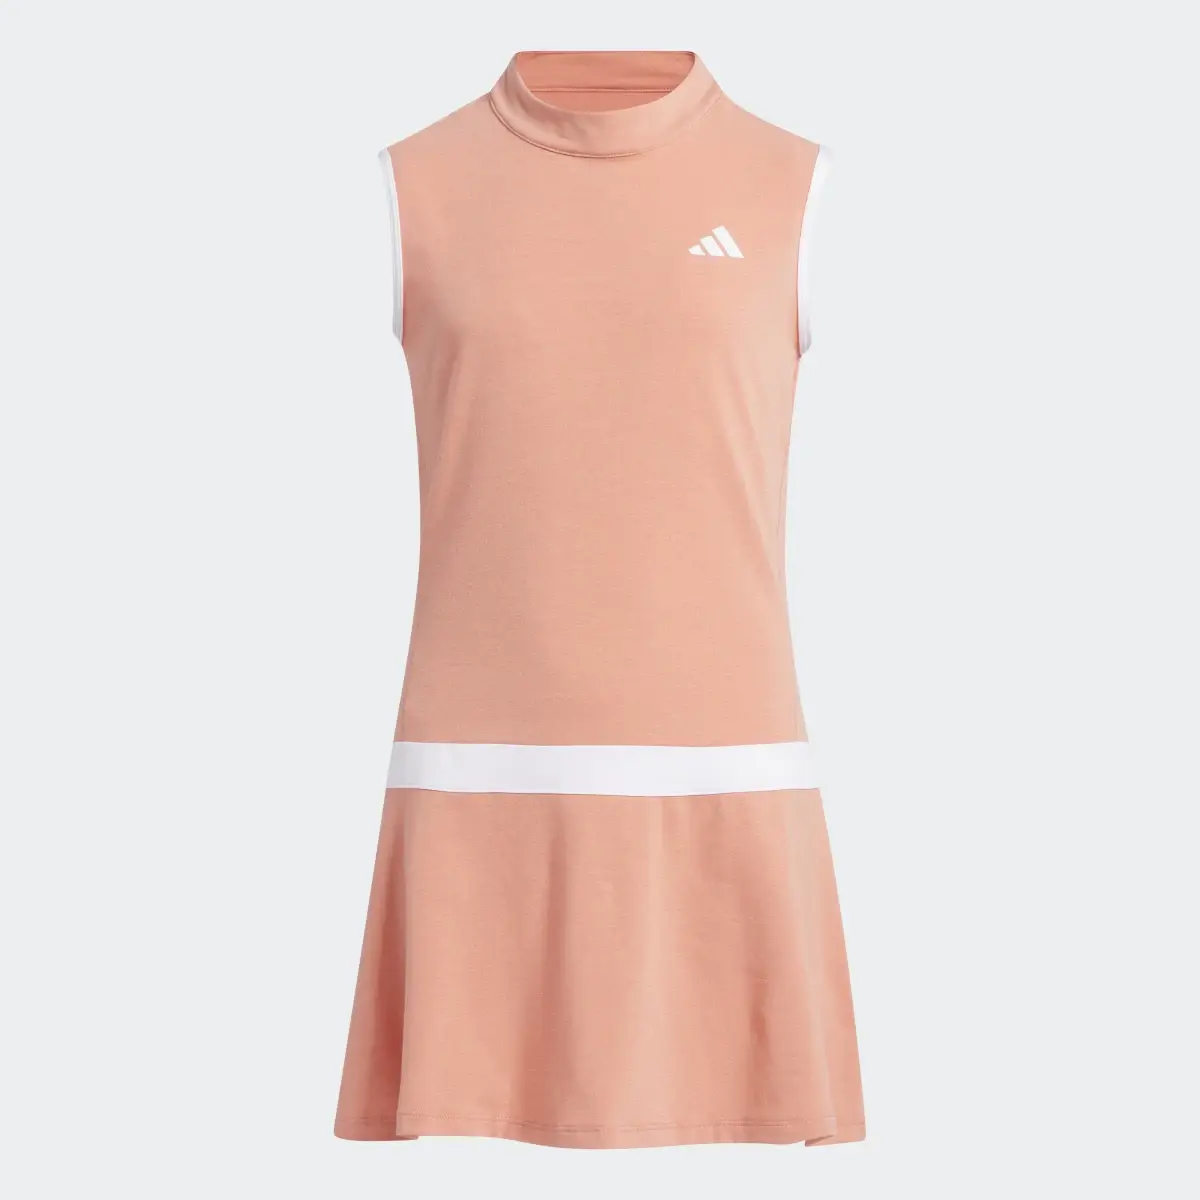 Adidas Sleeveless Versatile Dress. 2